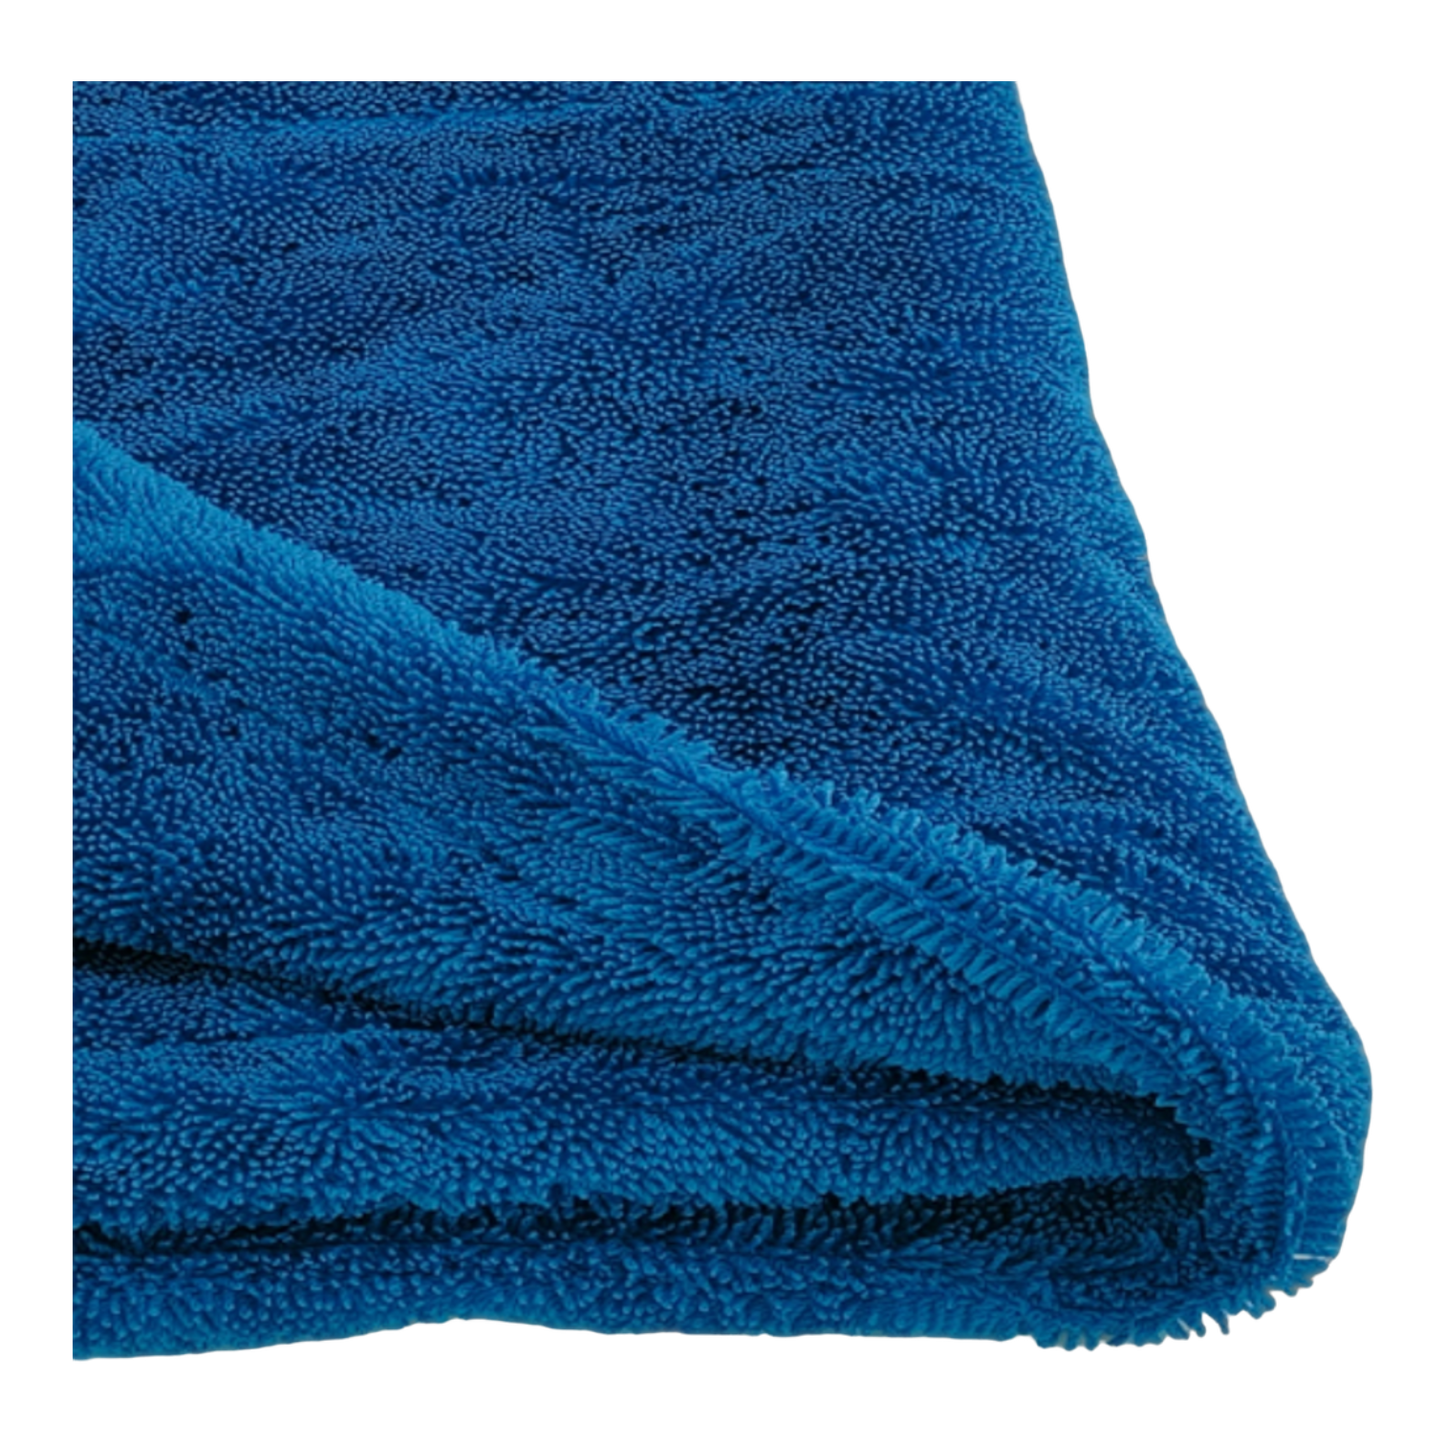 Mammoth Microfibre Edgless Drying Towel, Twisted Loop 1200gsm